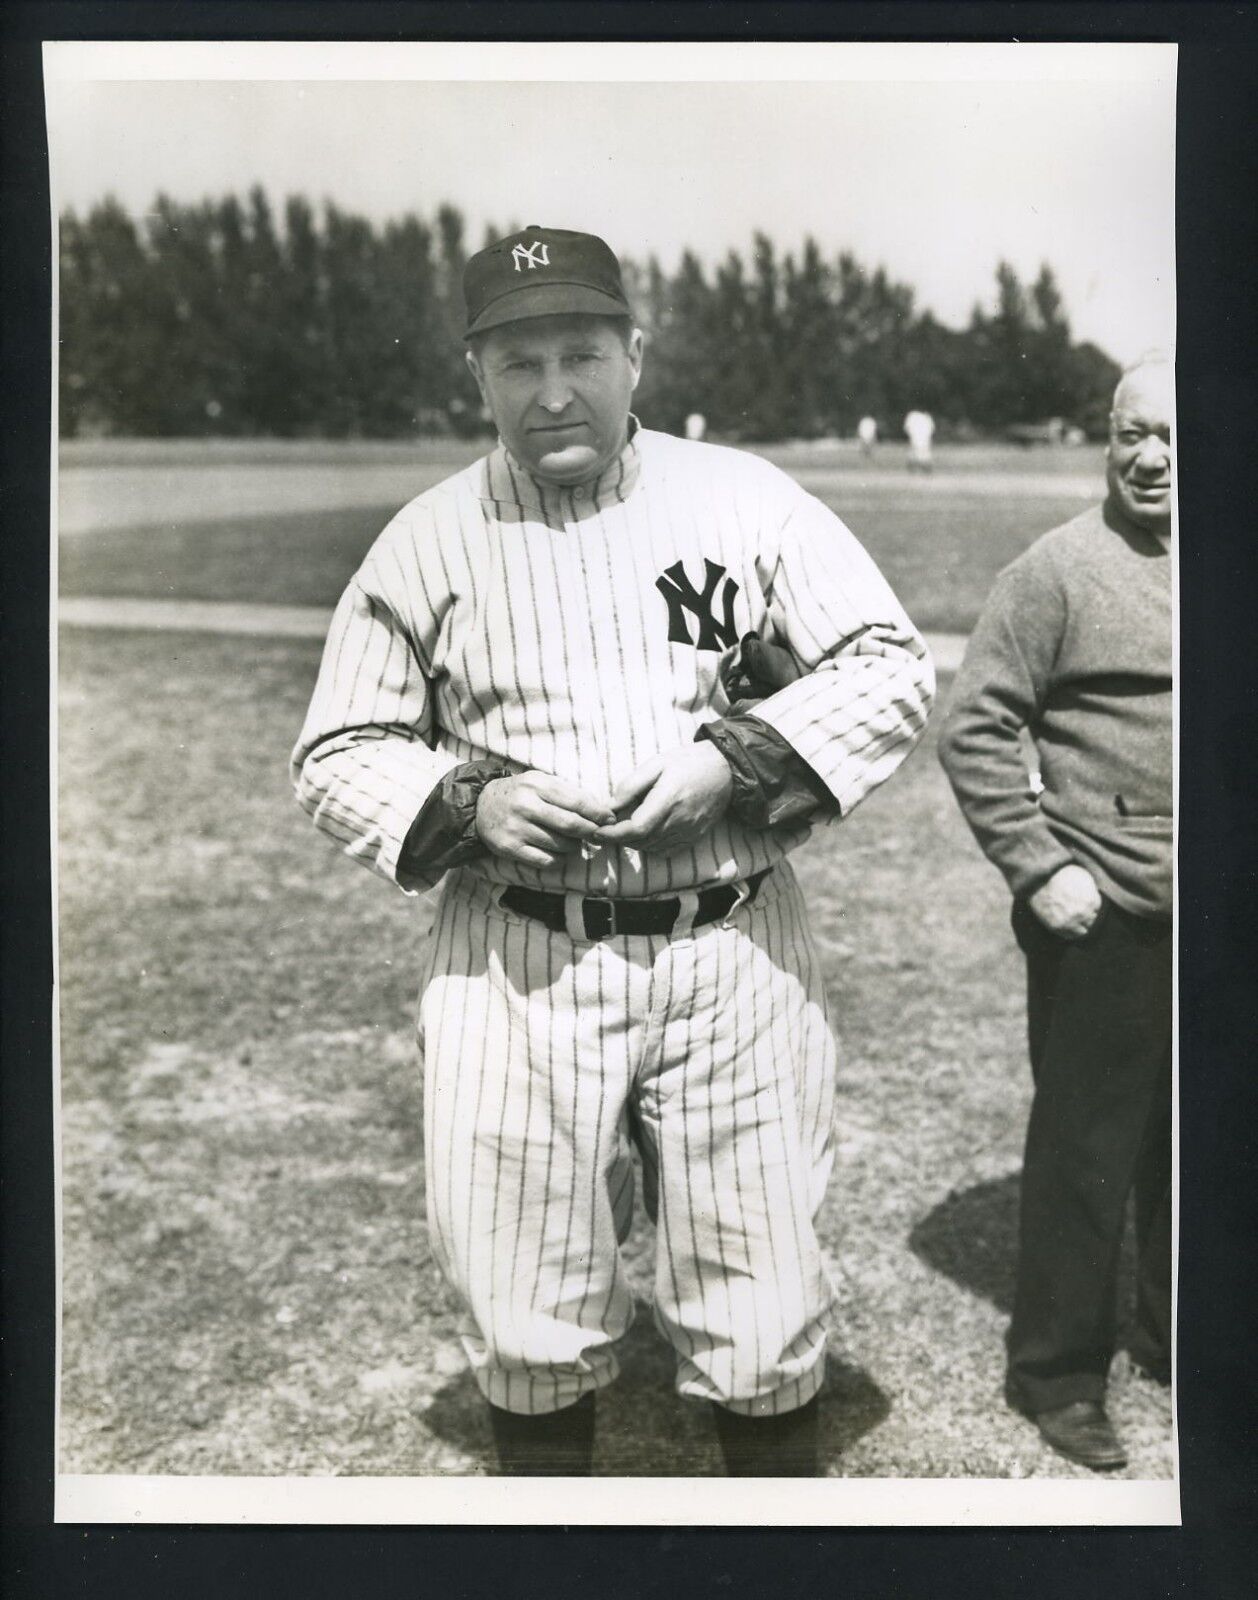 Joe McCarthy 1930 's Press Original Photo Poster painting from New York Yankees archives